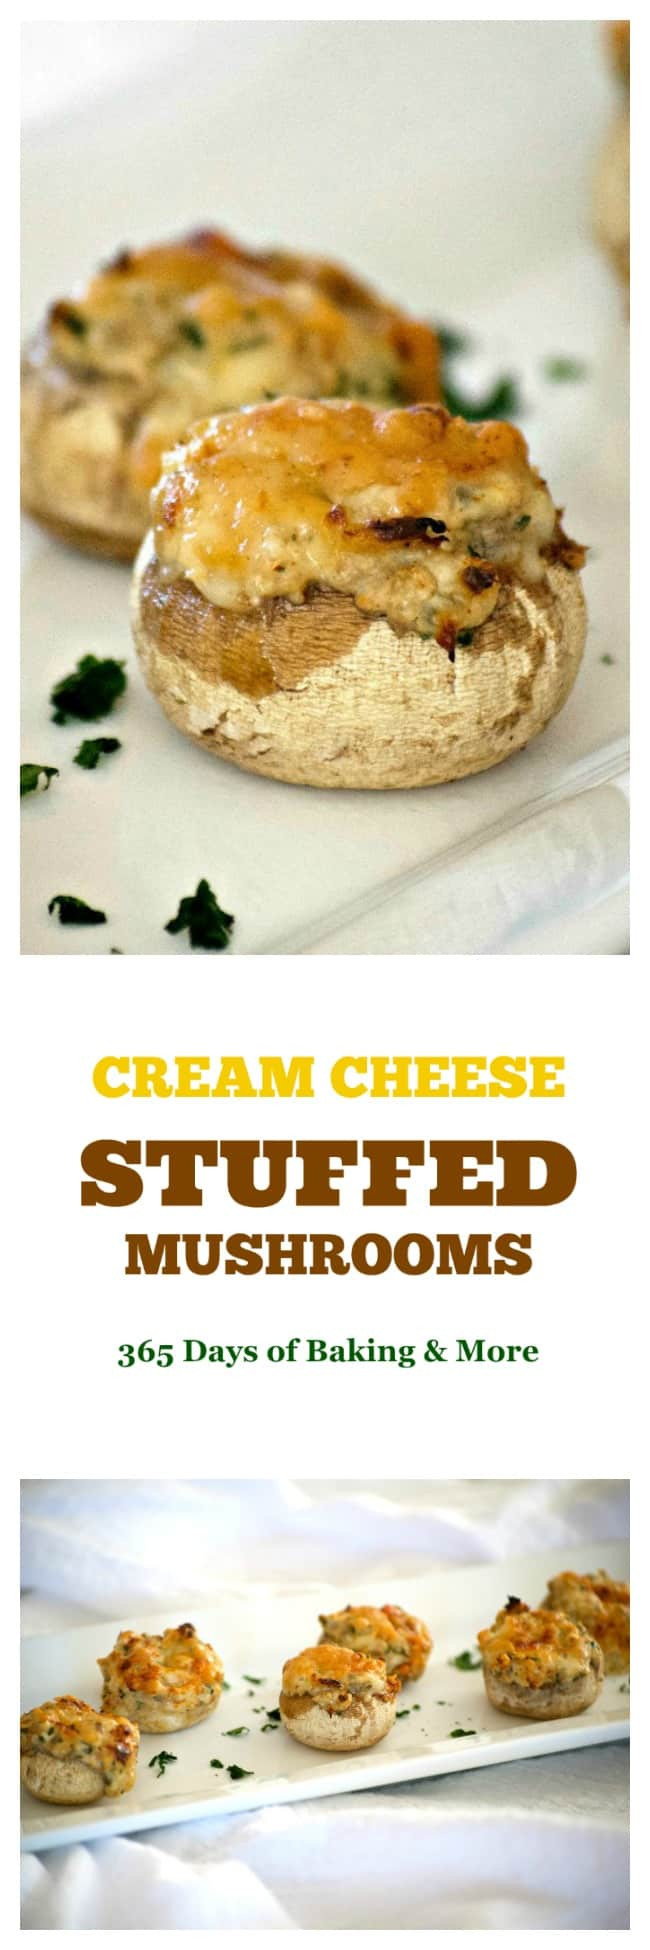 Stuffed Mushrooms With Cream Cheese
 Cream Cheese Stuffed Mushrooms 365 Days of Baking and More